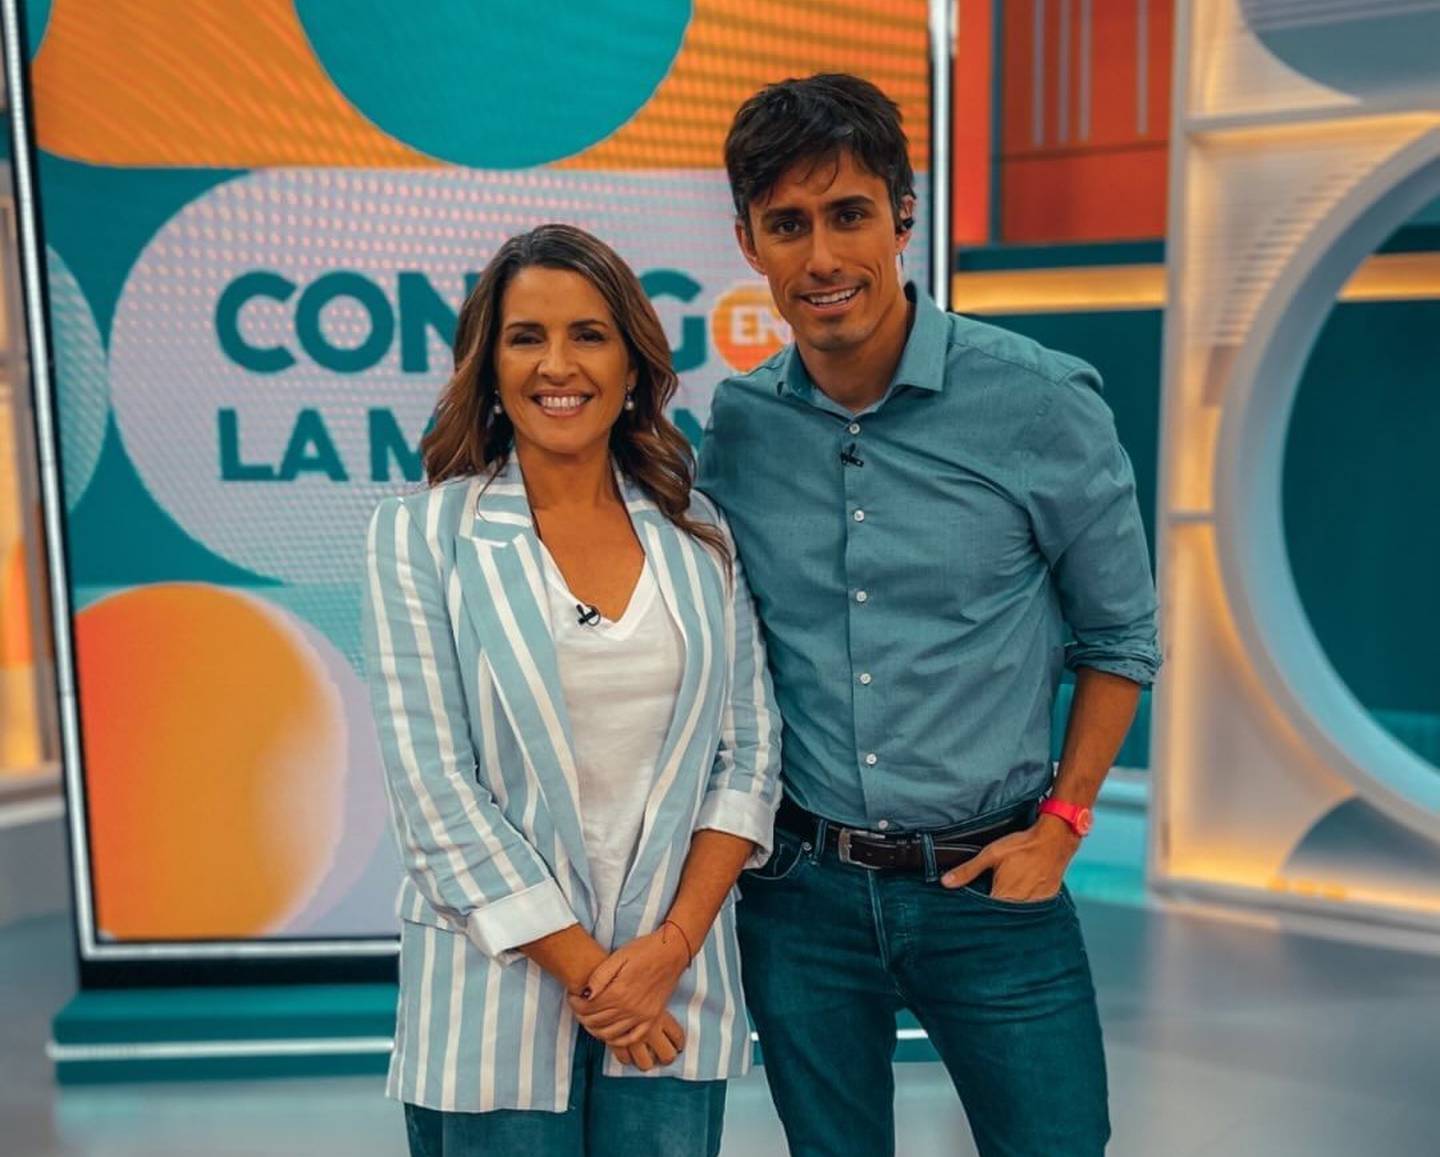 Monserrat Álvarez y Roberto Cox en "Contigo en la Mañana"